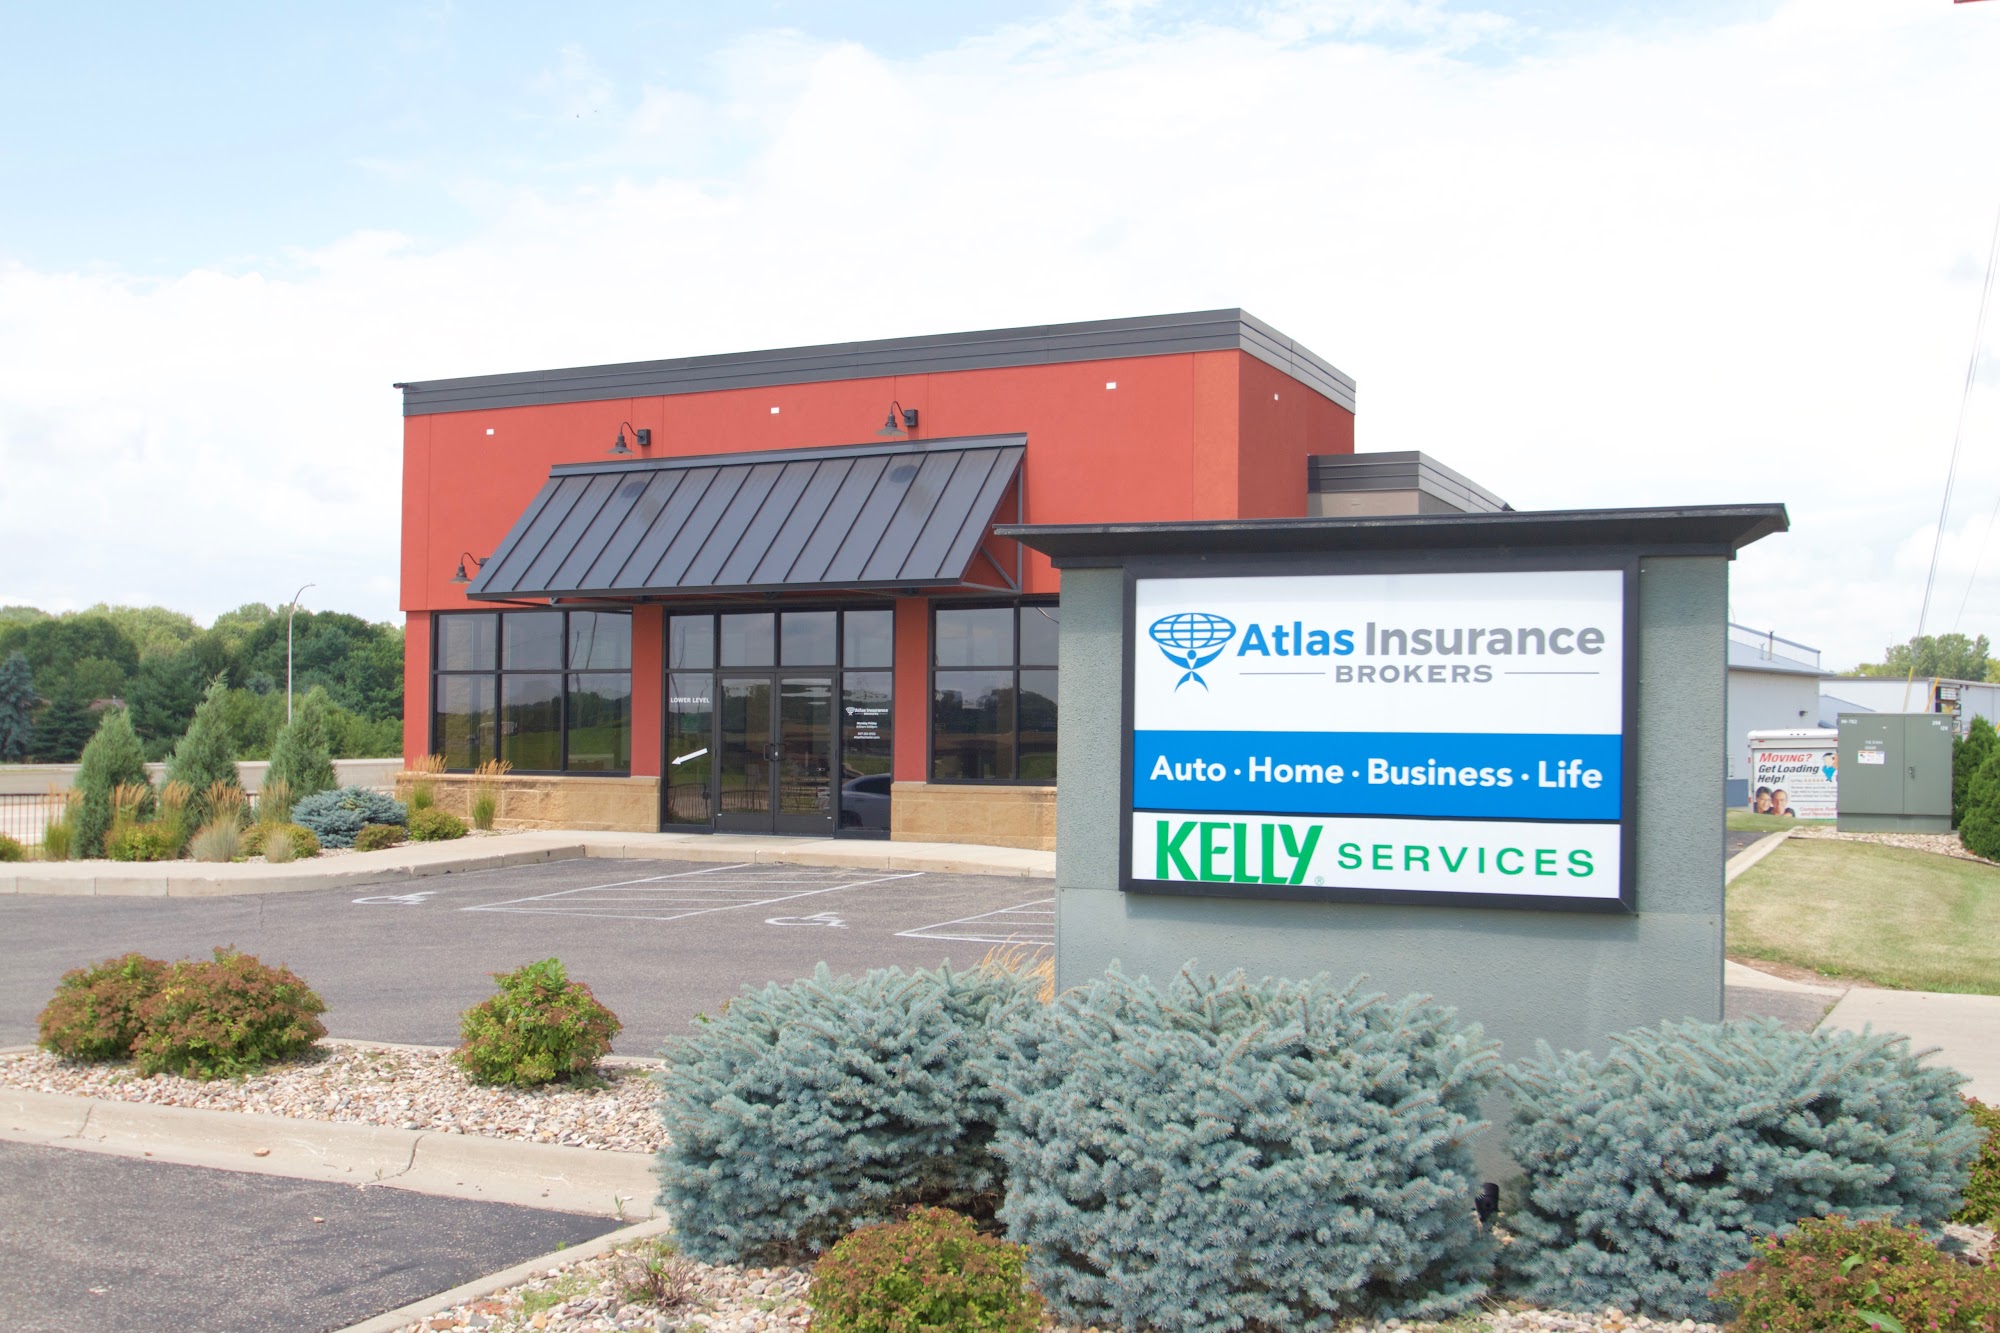 Atlas Insurance Brokers